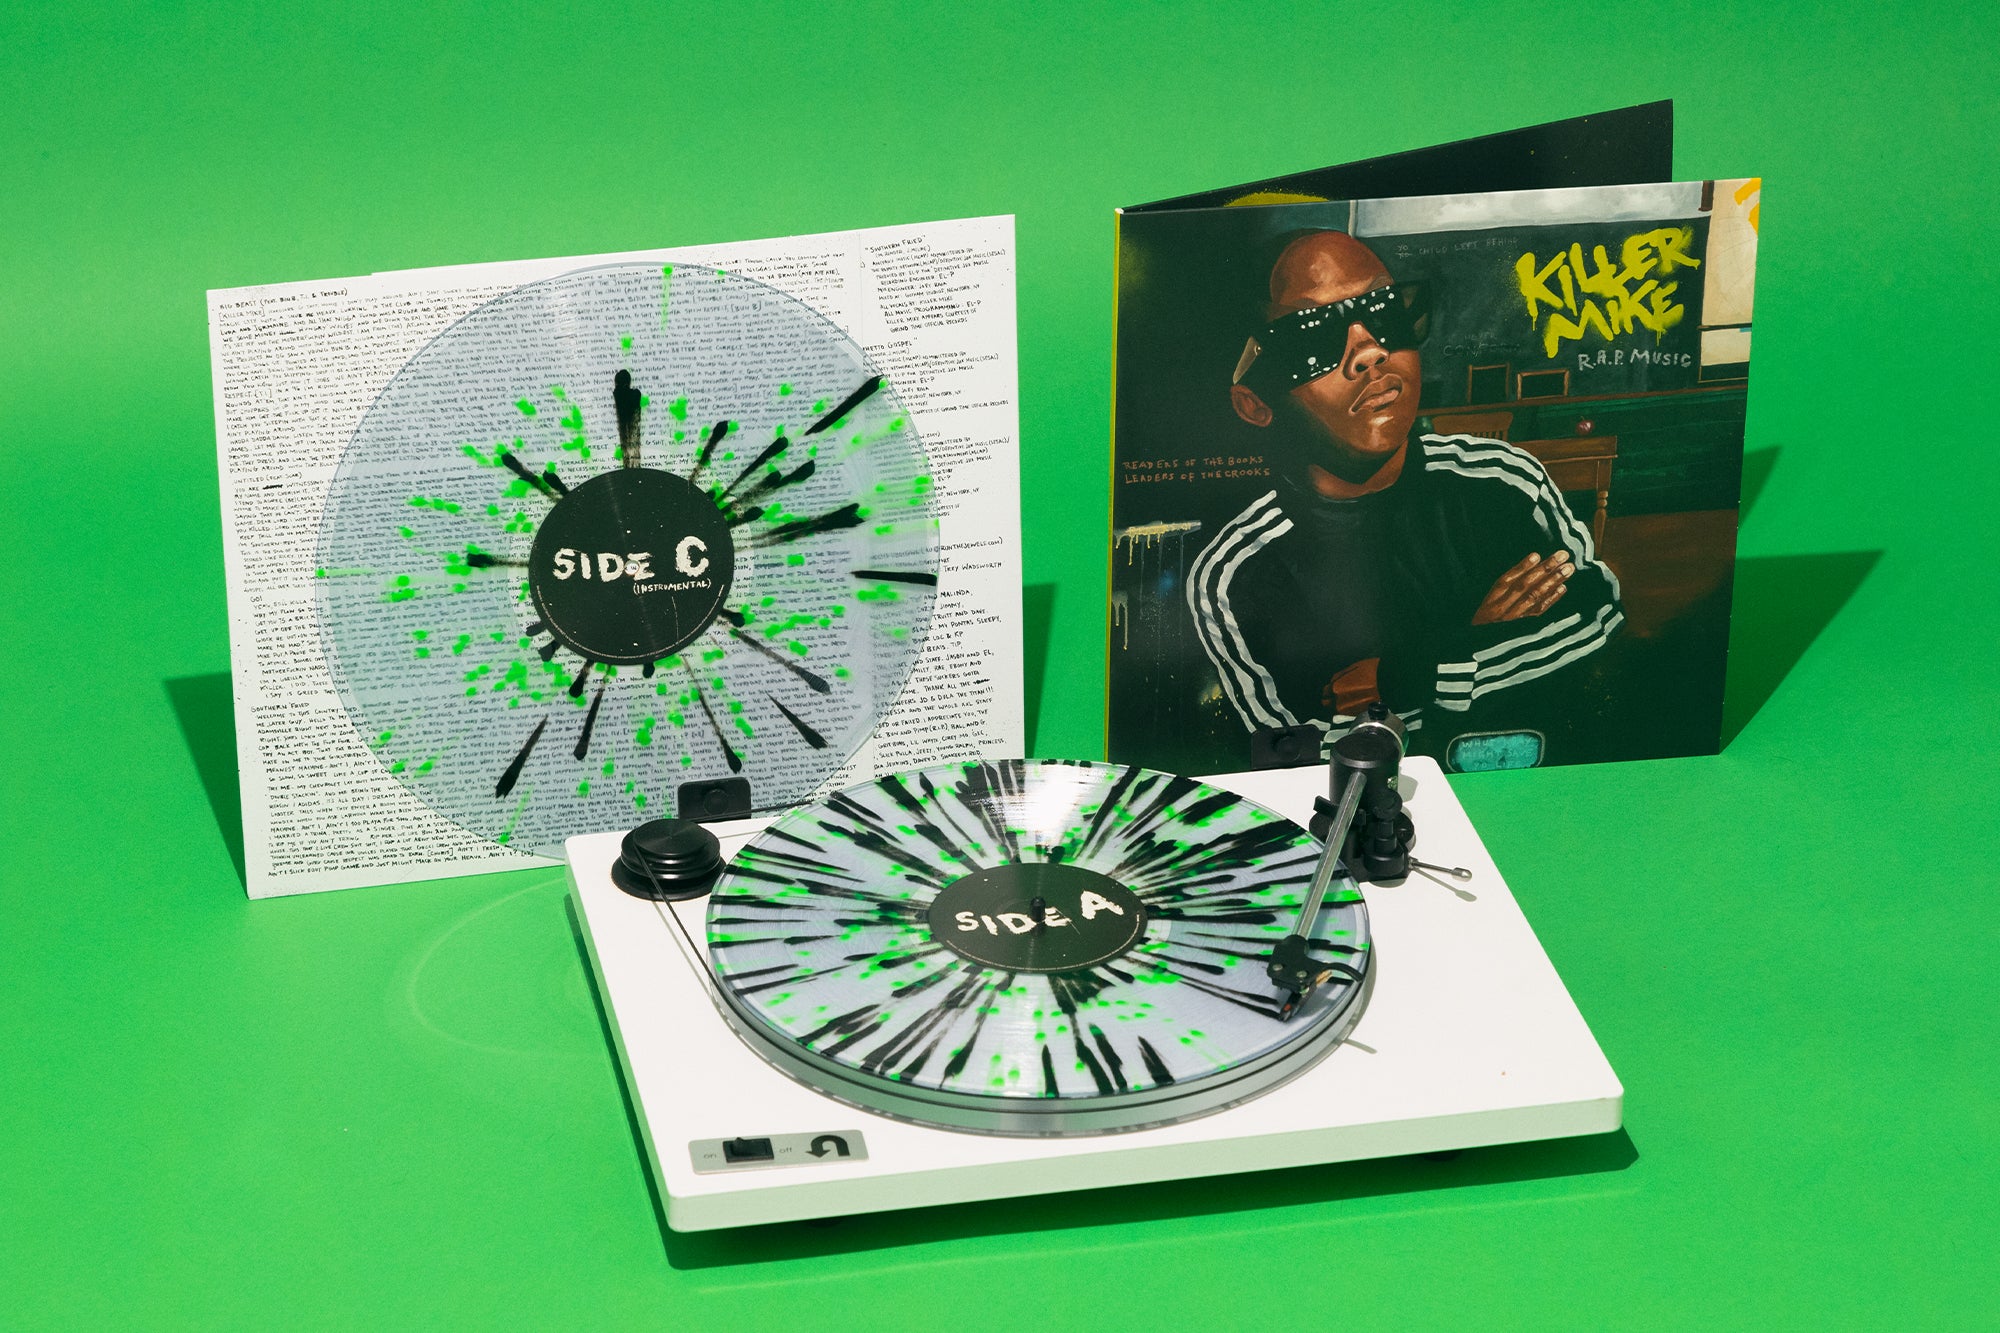 Killer Mike - Rap Music (Explicit) - Vinyl 